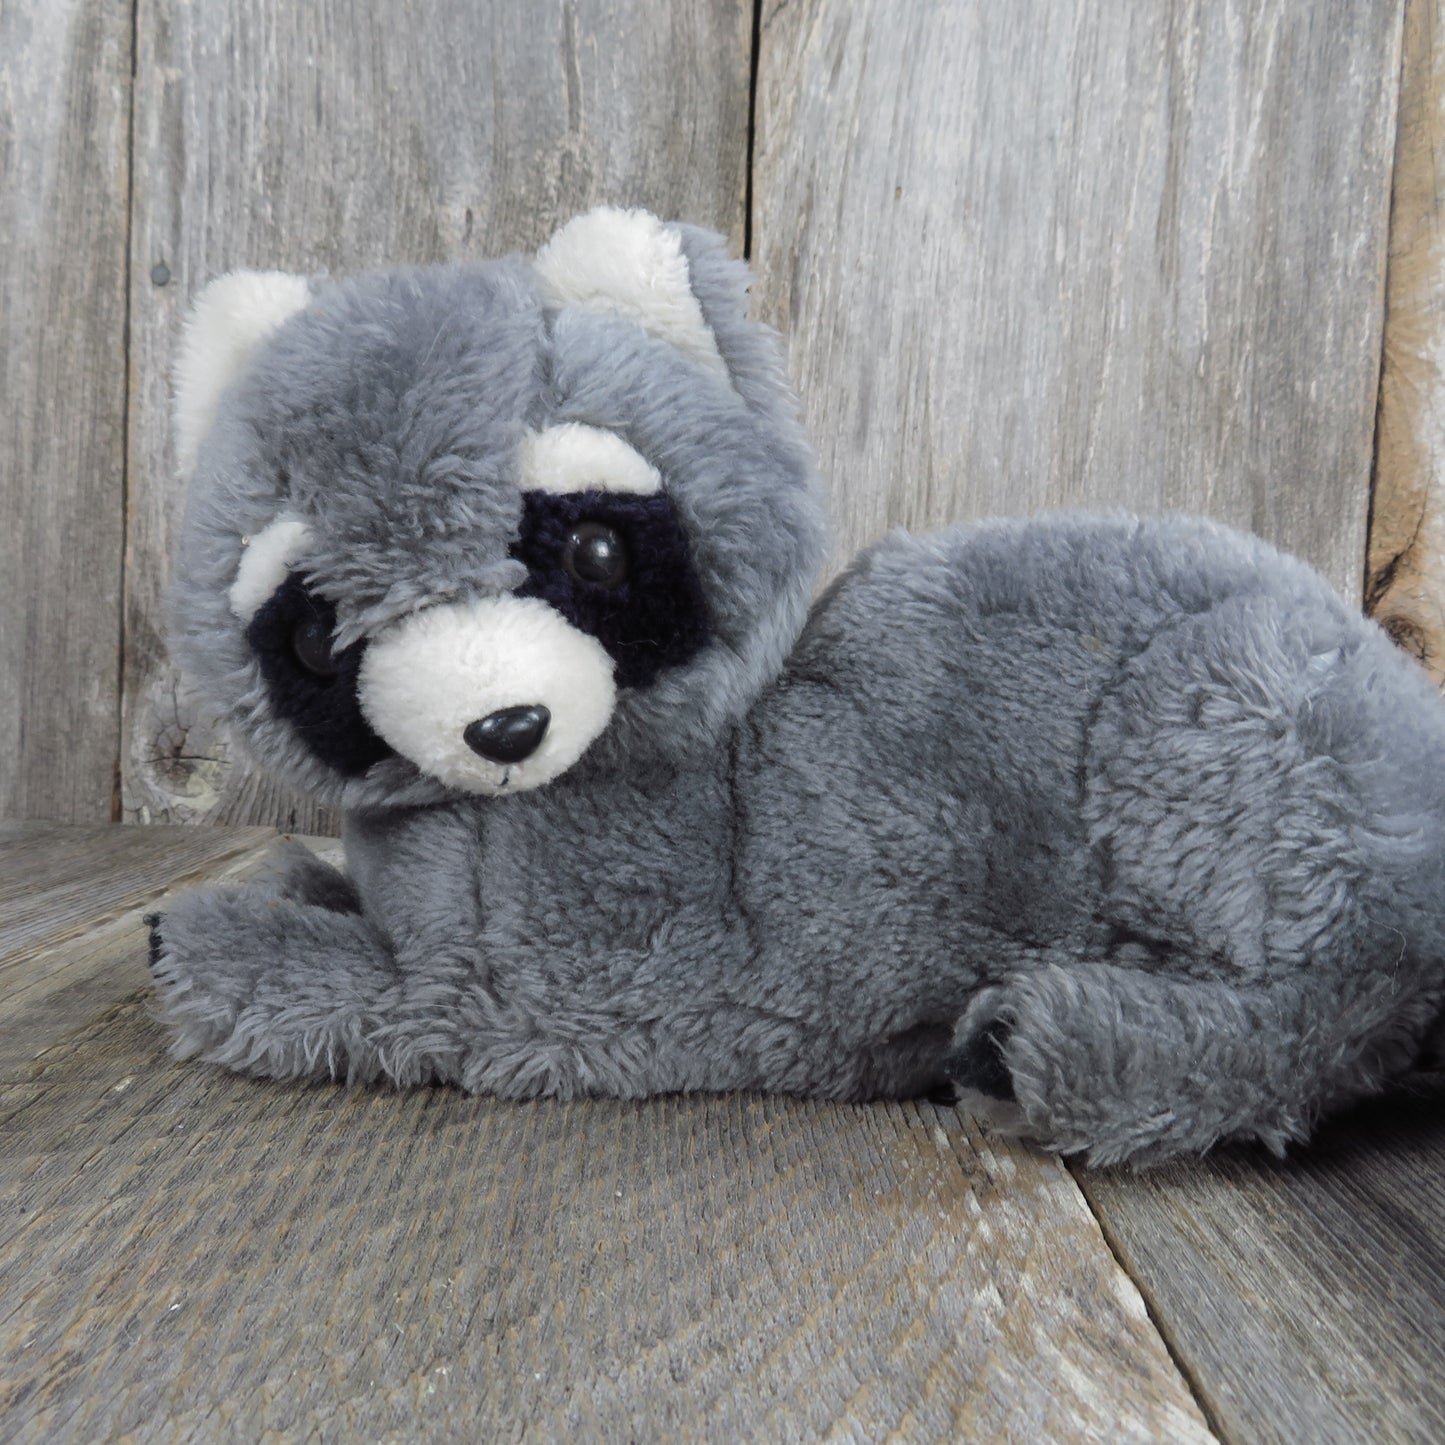 Vintage Raccoon Plush Grey Black Laying Stuffed Animal Gray by Dakin 1975 Korea - At Grandma's Table